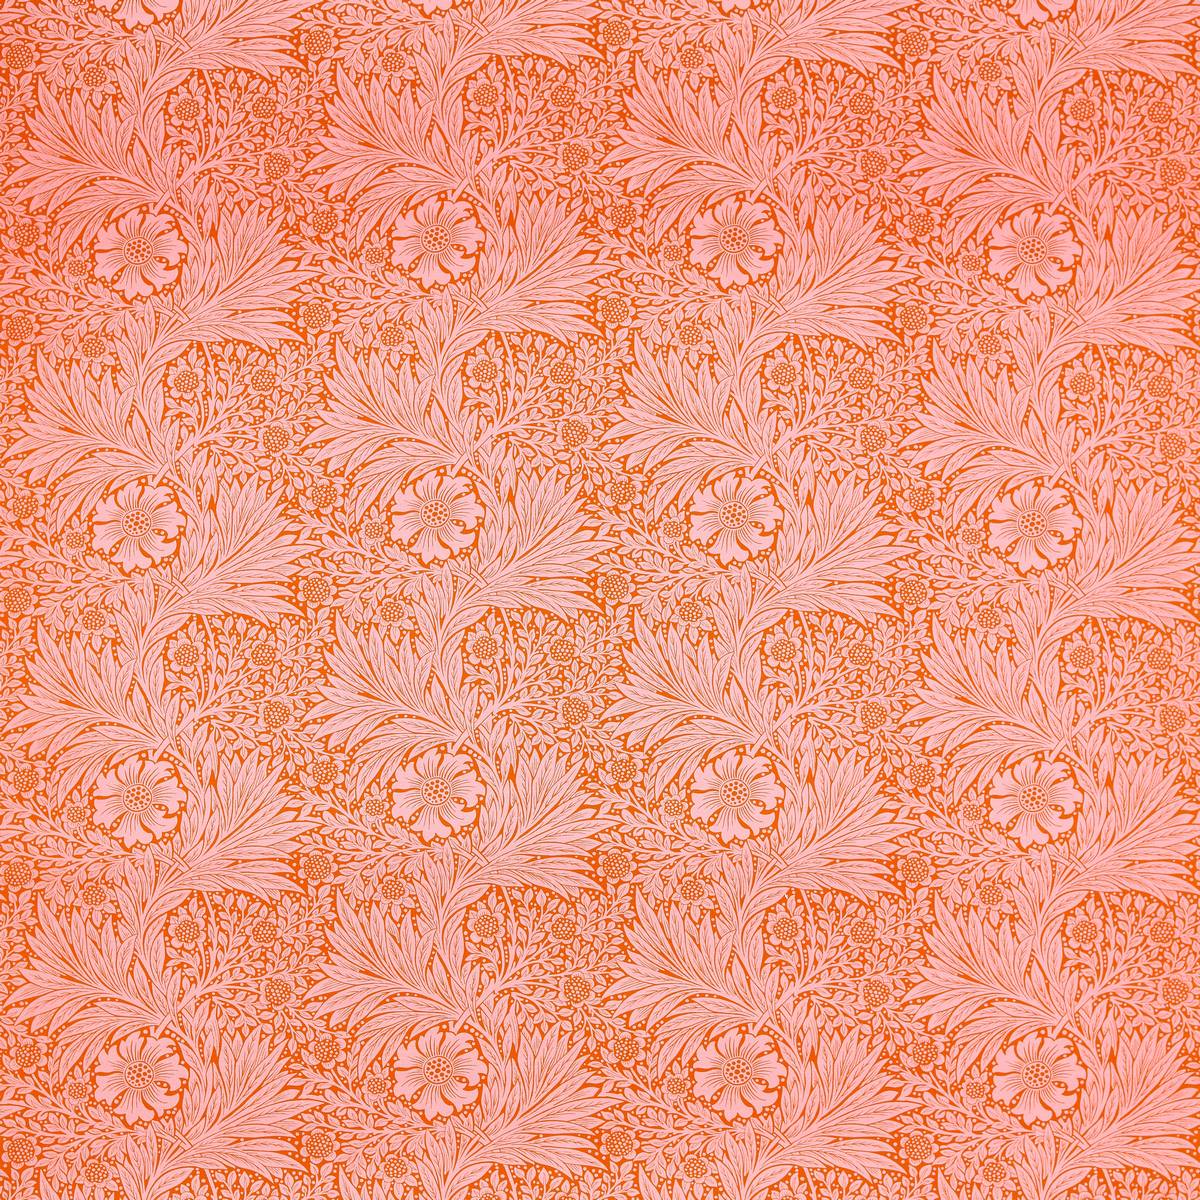 Marigold Orange/Pink Fabric by William Morris & Co.